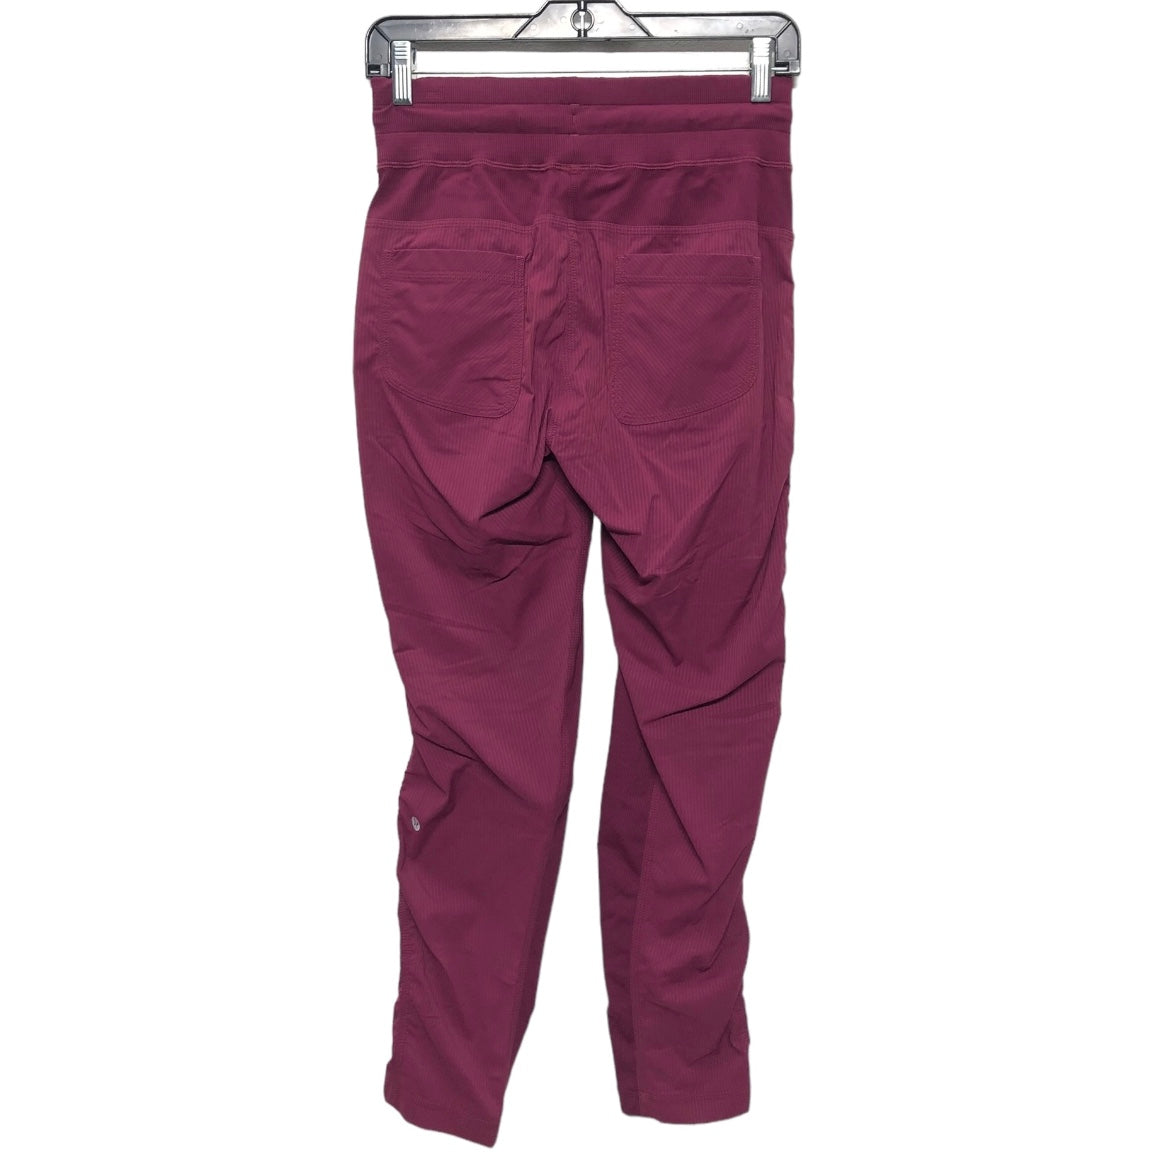 Pink & Purple Athletic Pants Lululemon, Size 4